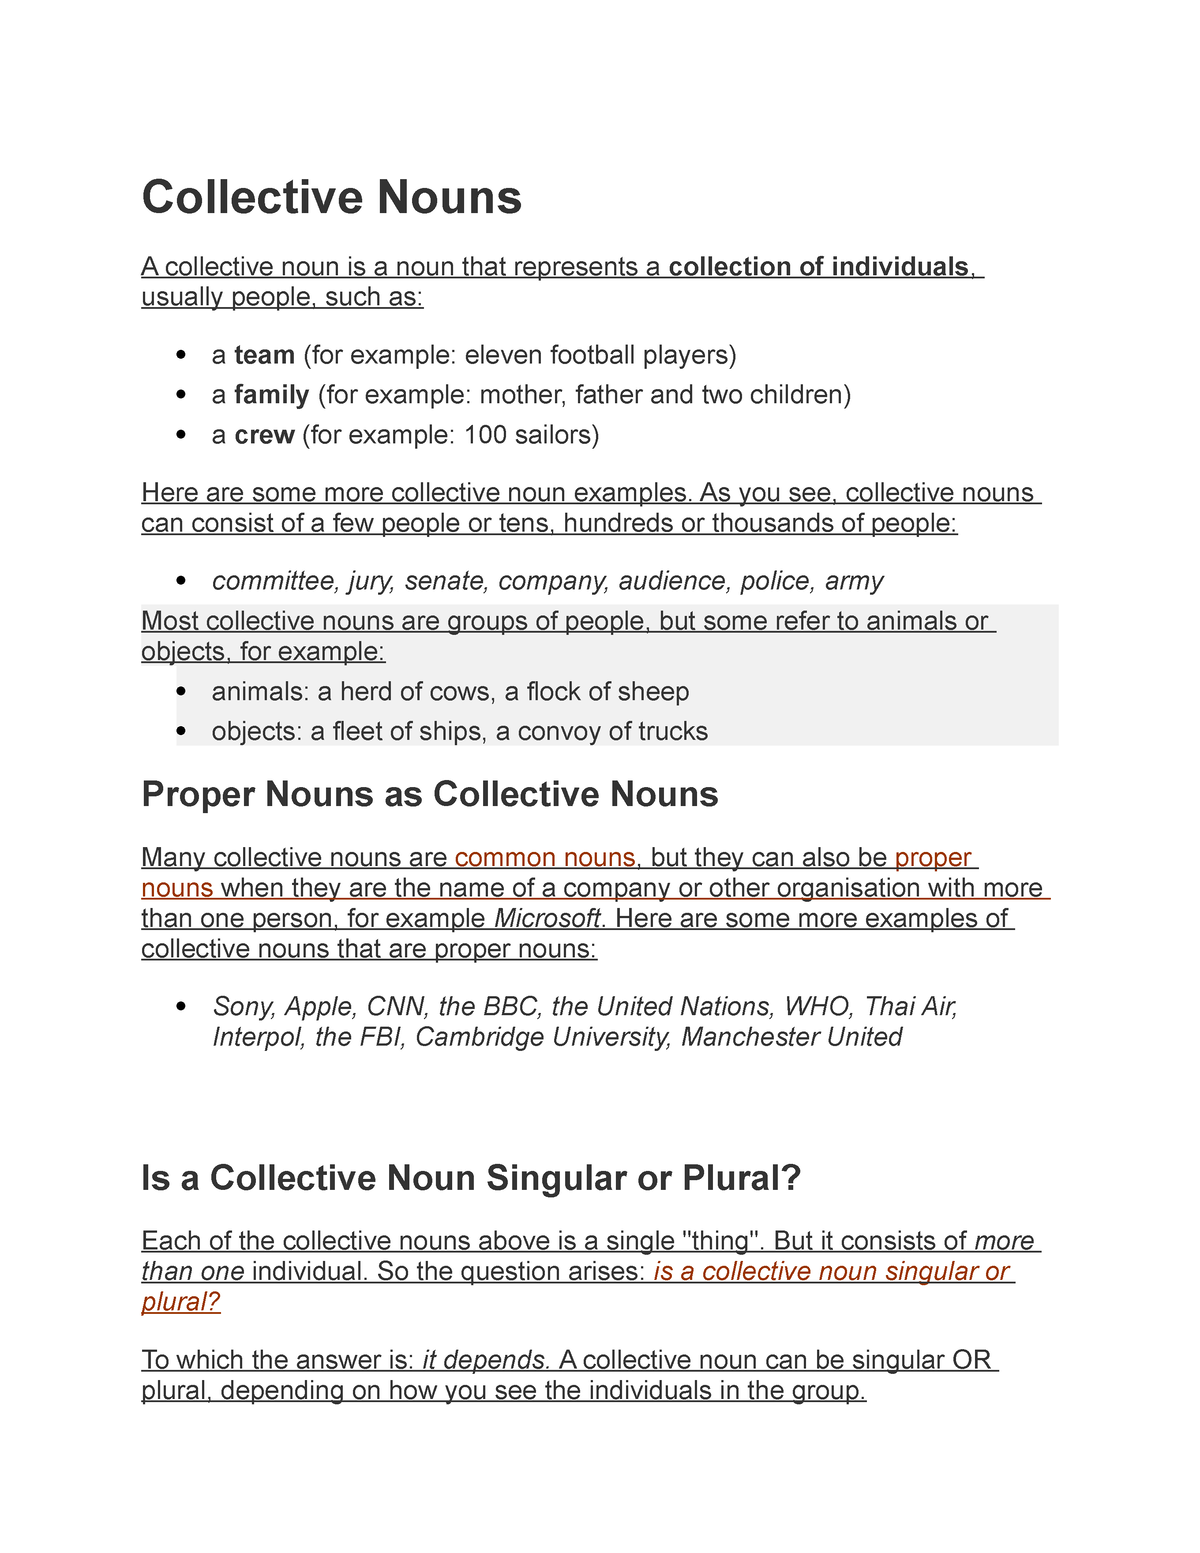 collective-nouns-and-verb-agreement-4-collective-nouns-a-collective